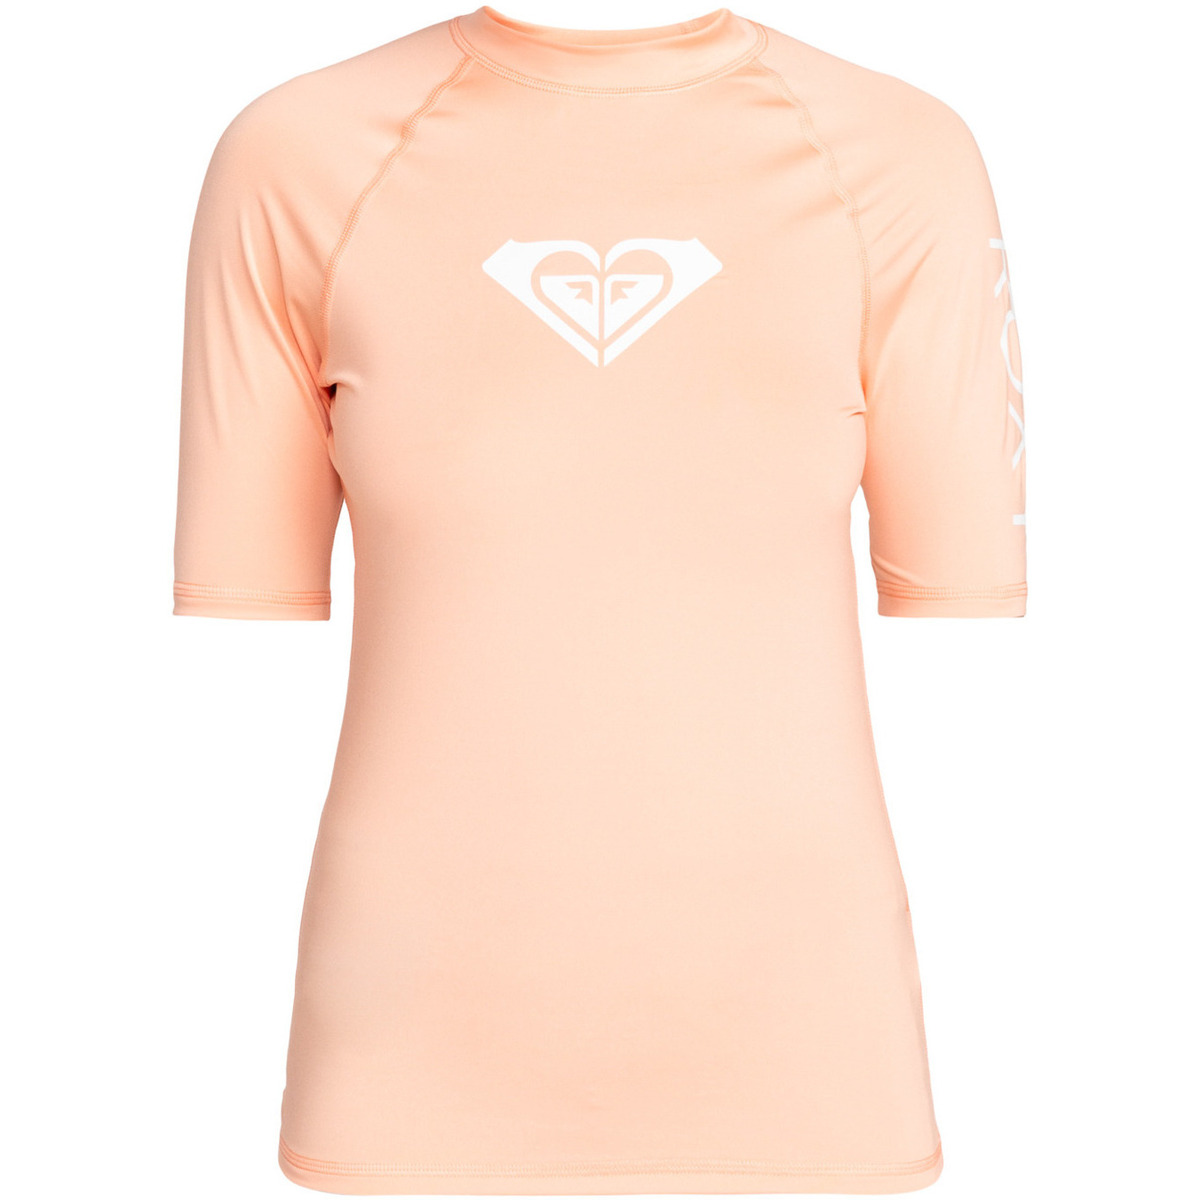 Vêtements Femme T-shirts manches courtes Roxy Whole Hearted Rose